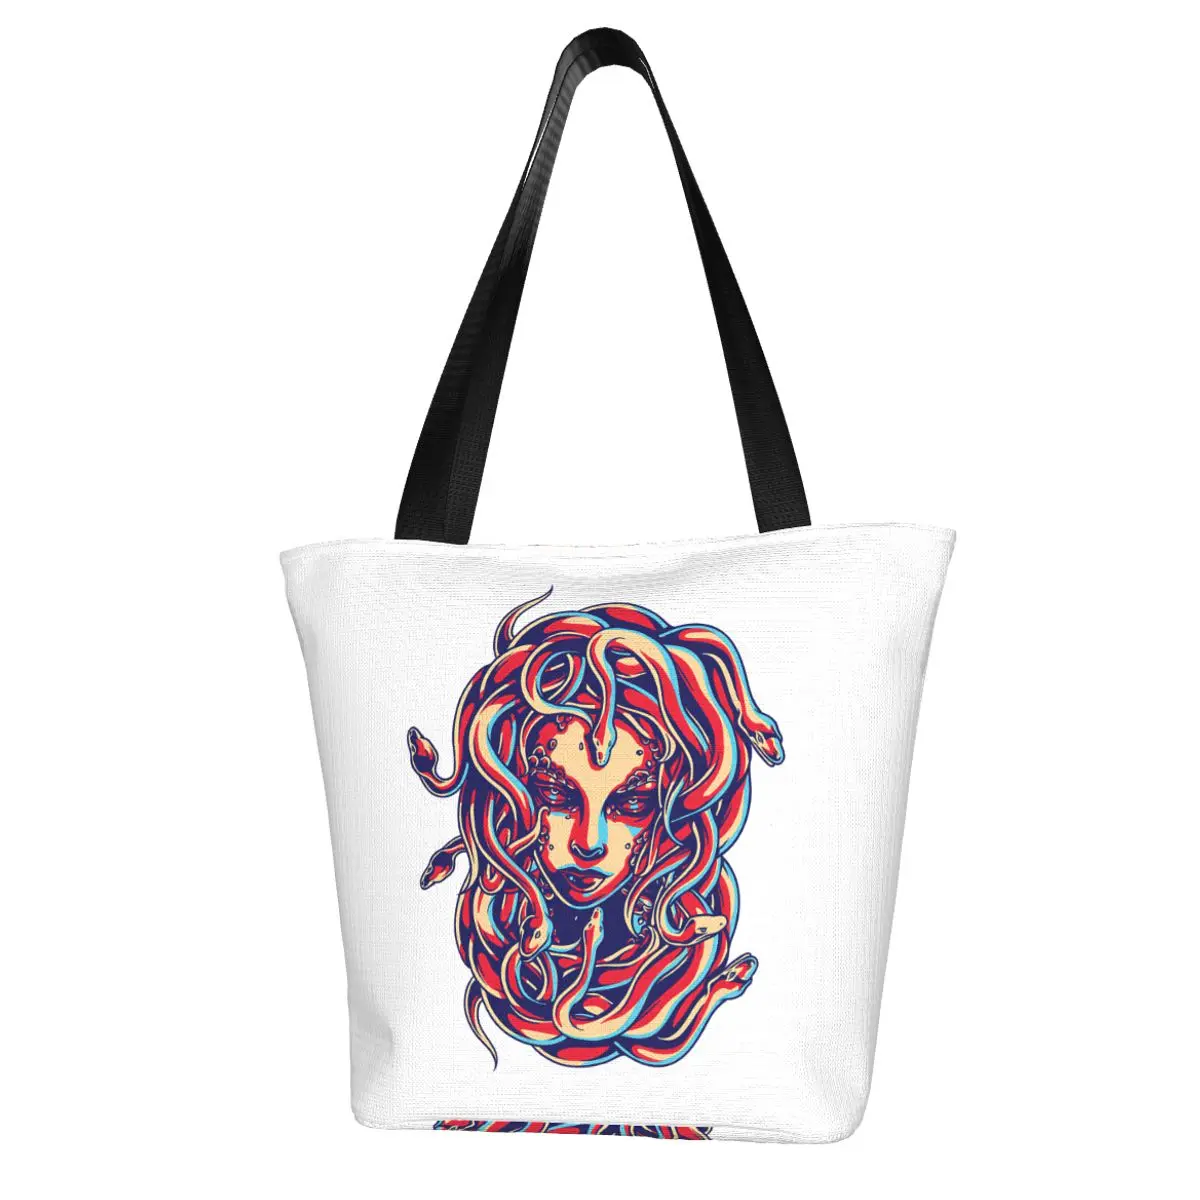 Medusa Shopping Bag Aesthetic Cloth Outdoor Handbag Female Fashion Bags